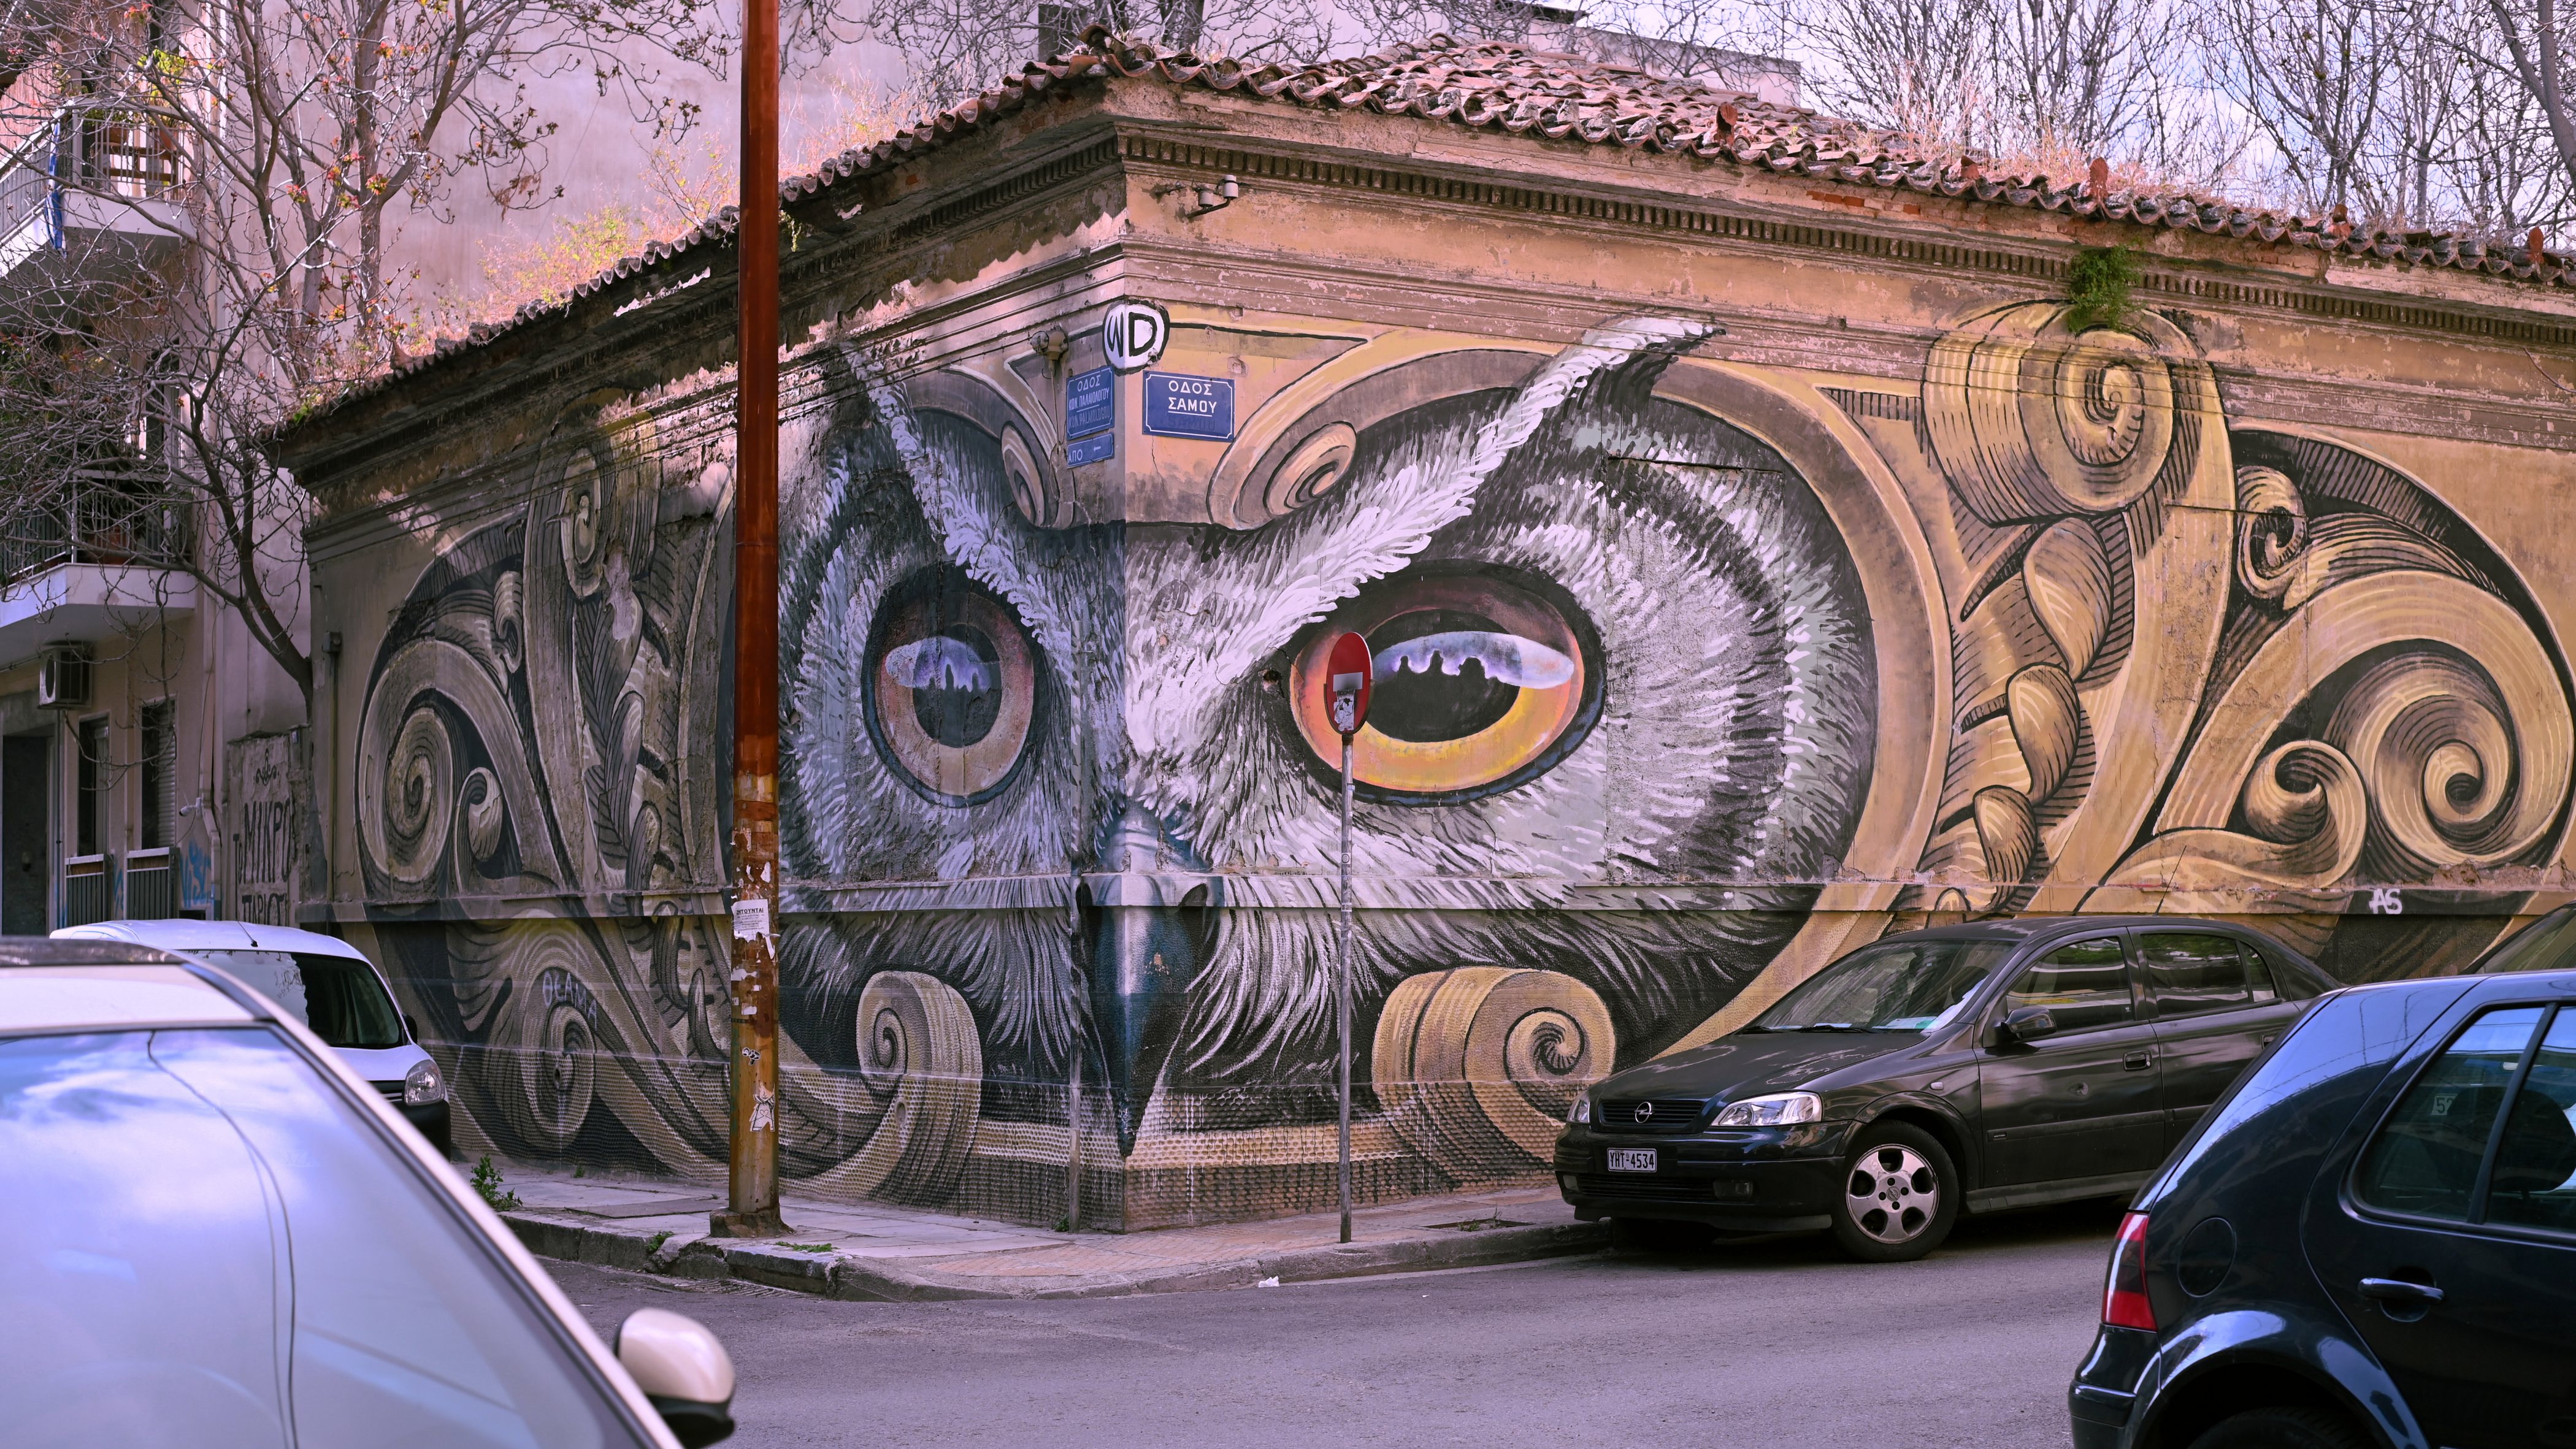 General 4200x2363 graffiti street art Wild Drawings (WD) Athens owl photography car vehicle street sidewalks animals birds artwork licence plates frontal view